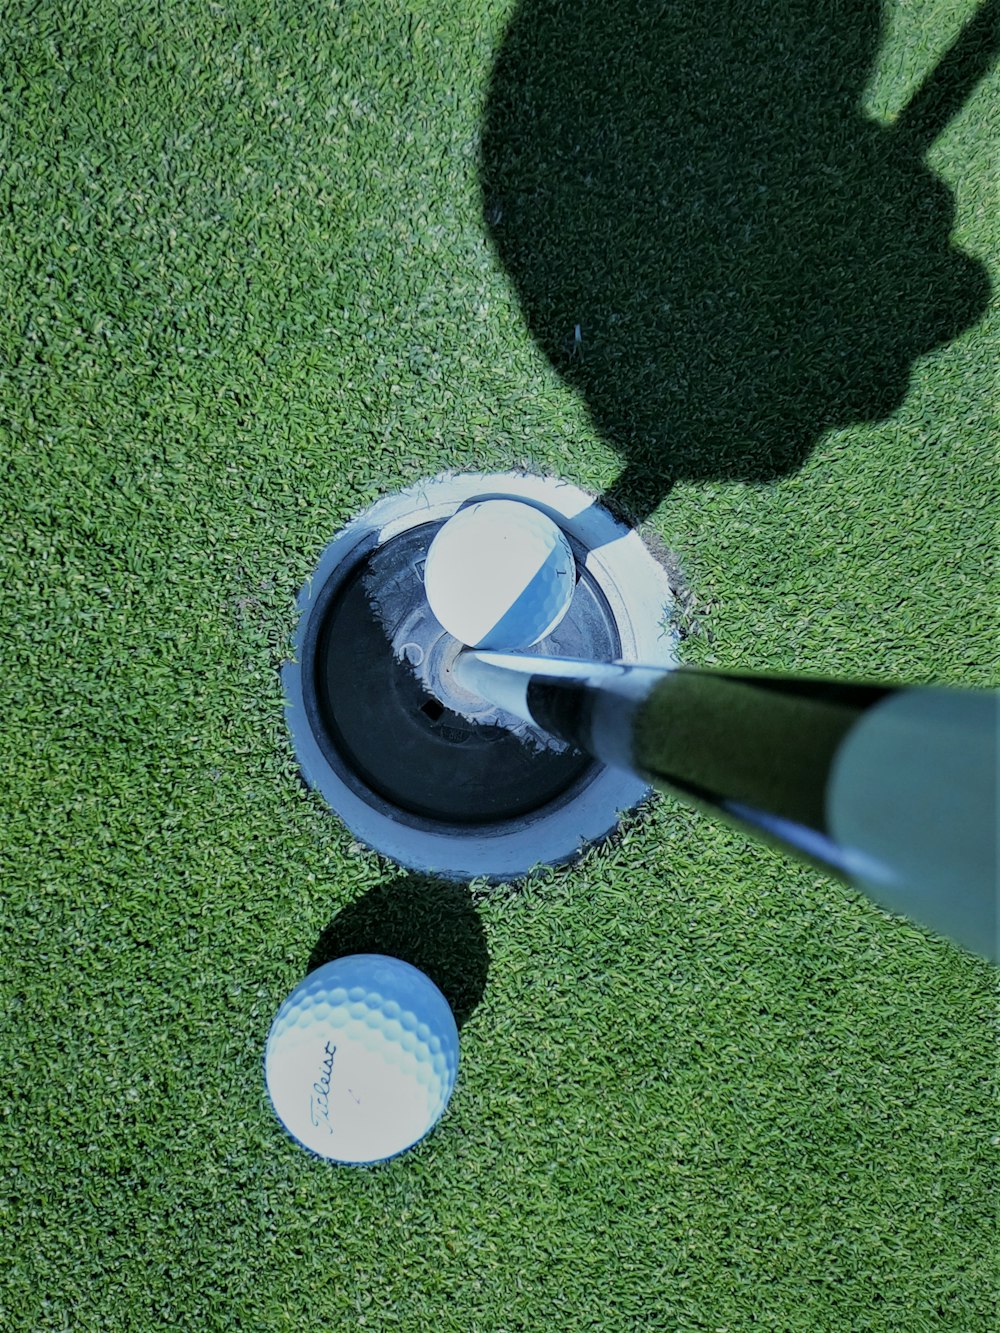 white golf ball on goal hole